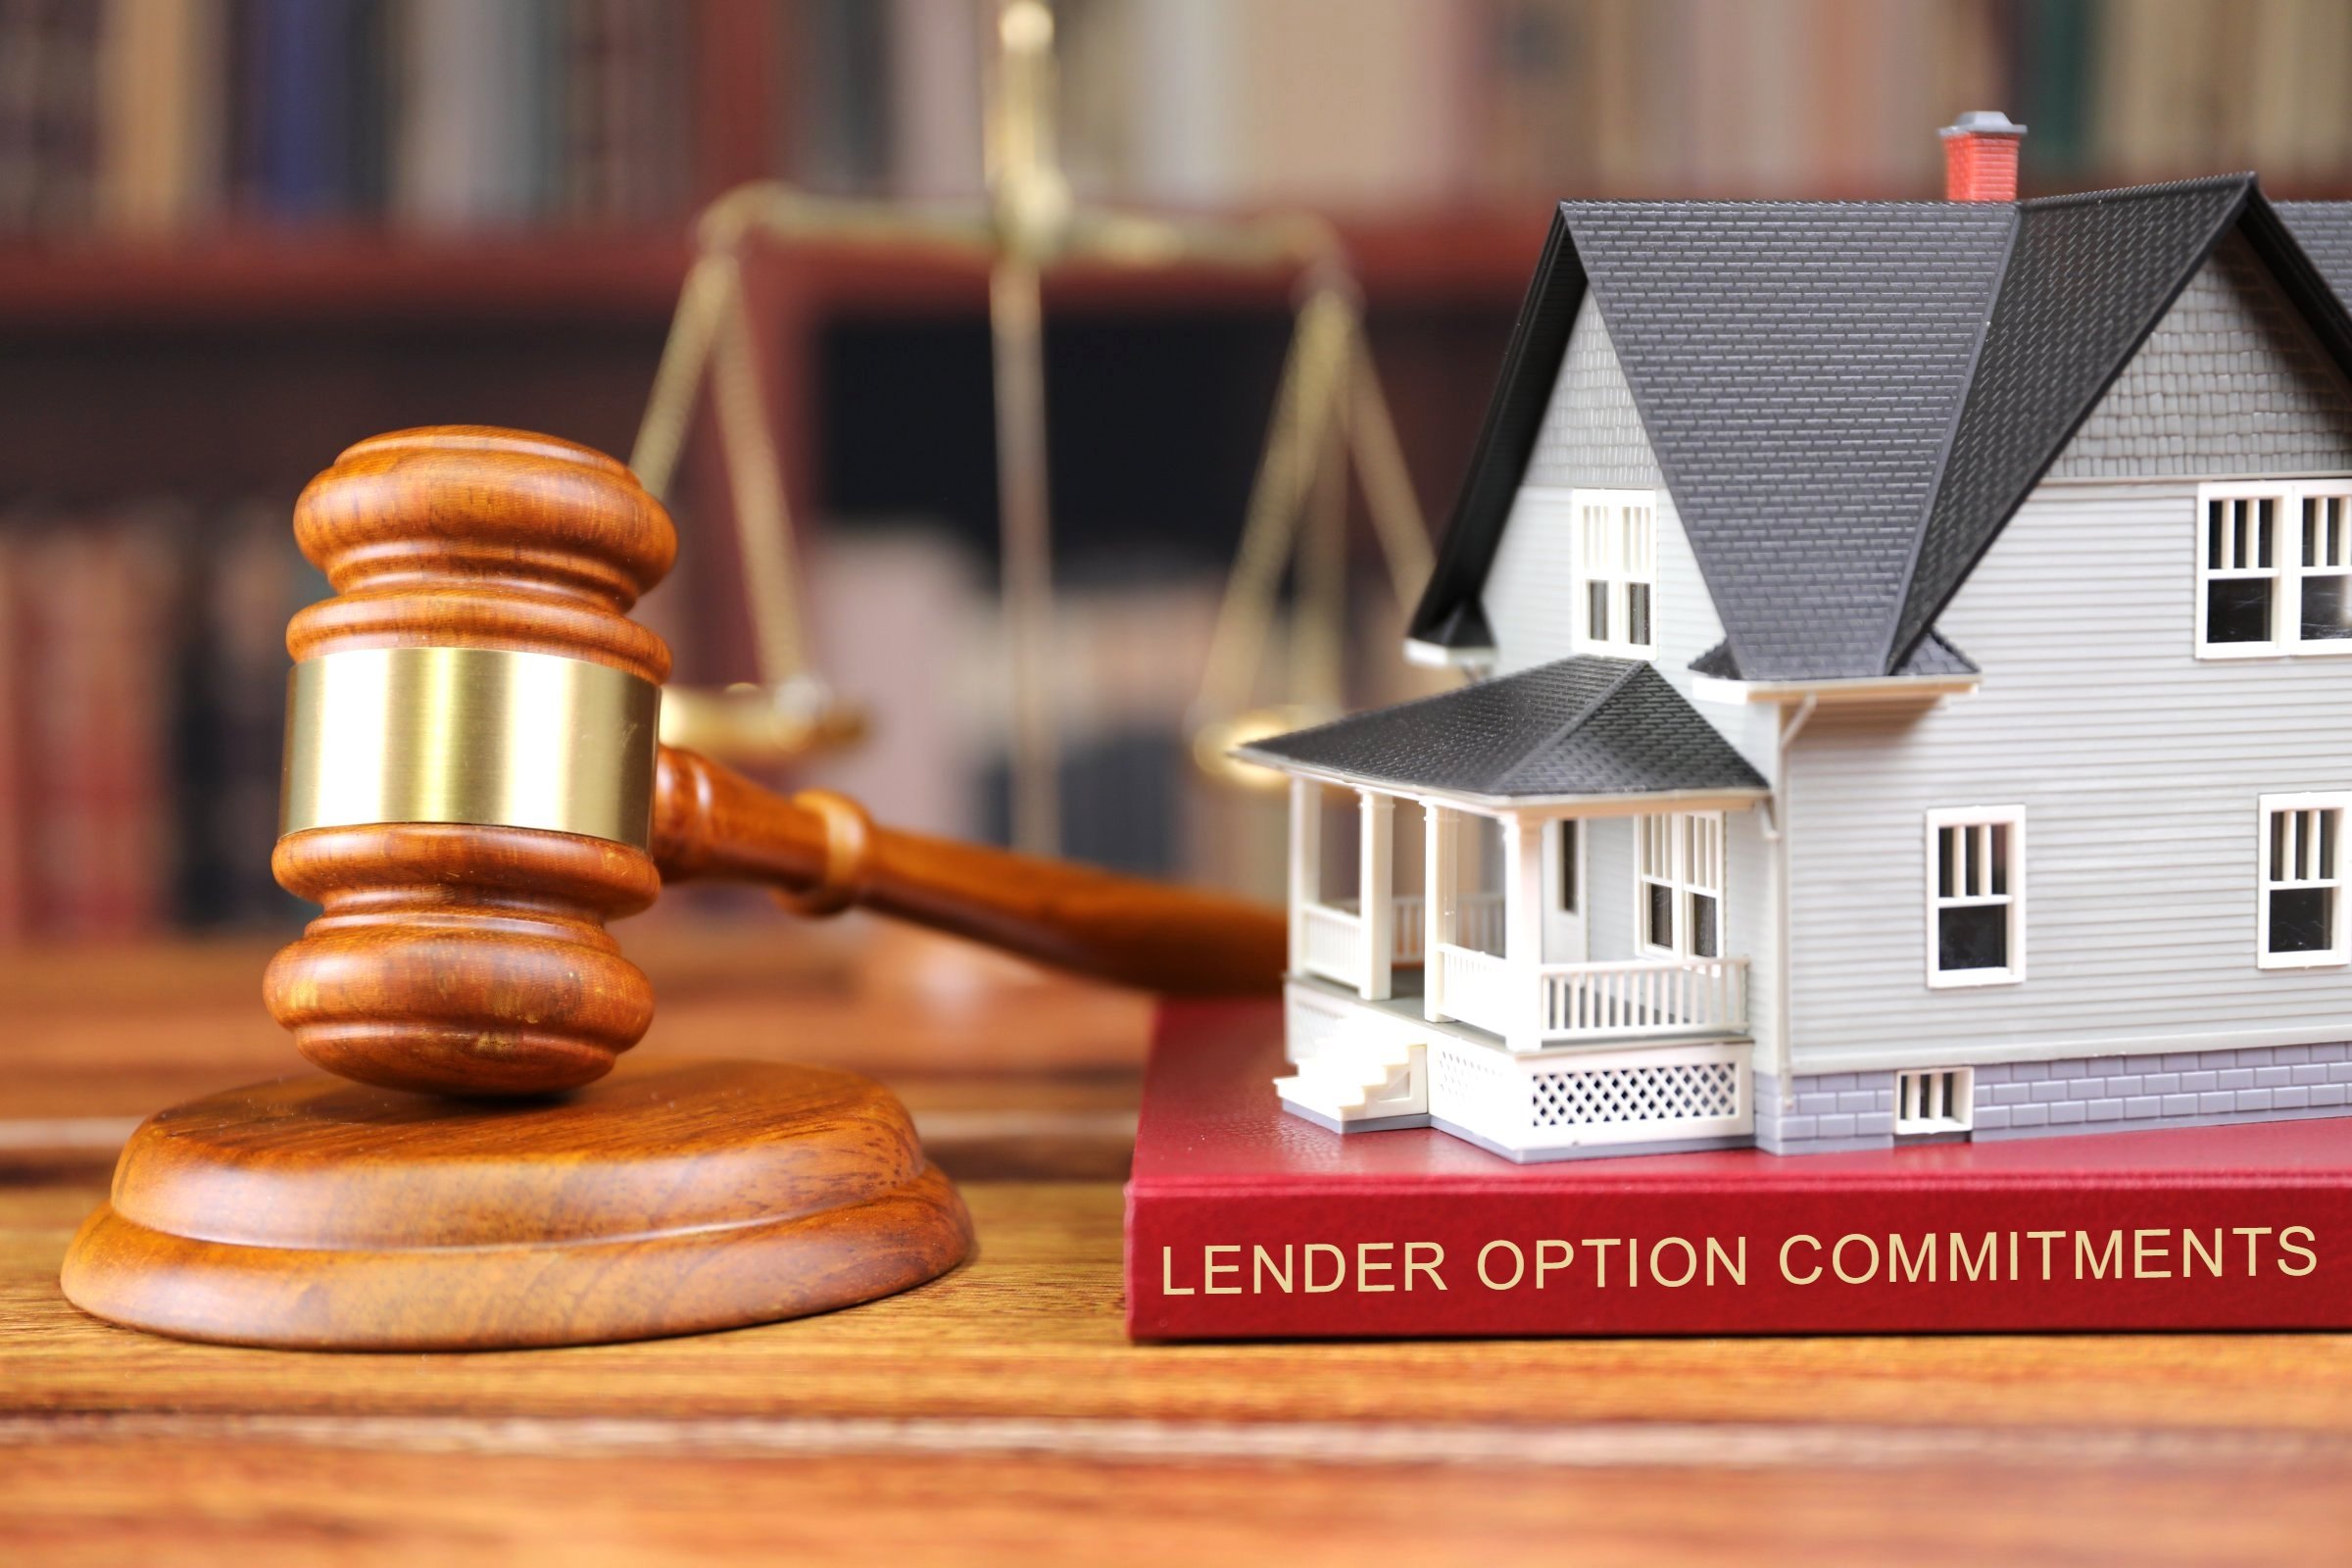 Lender Option Commitments